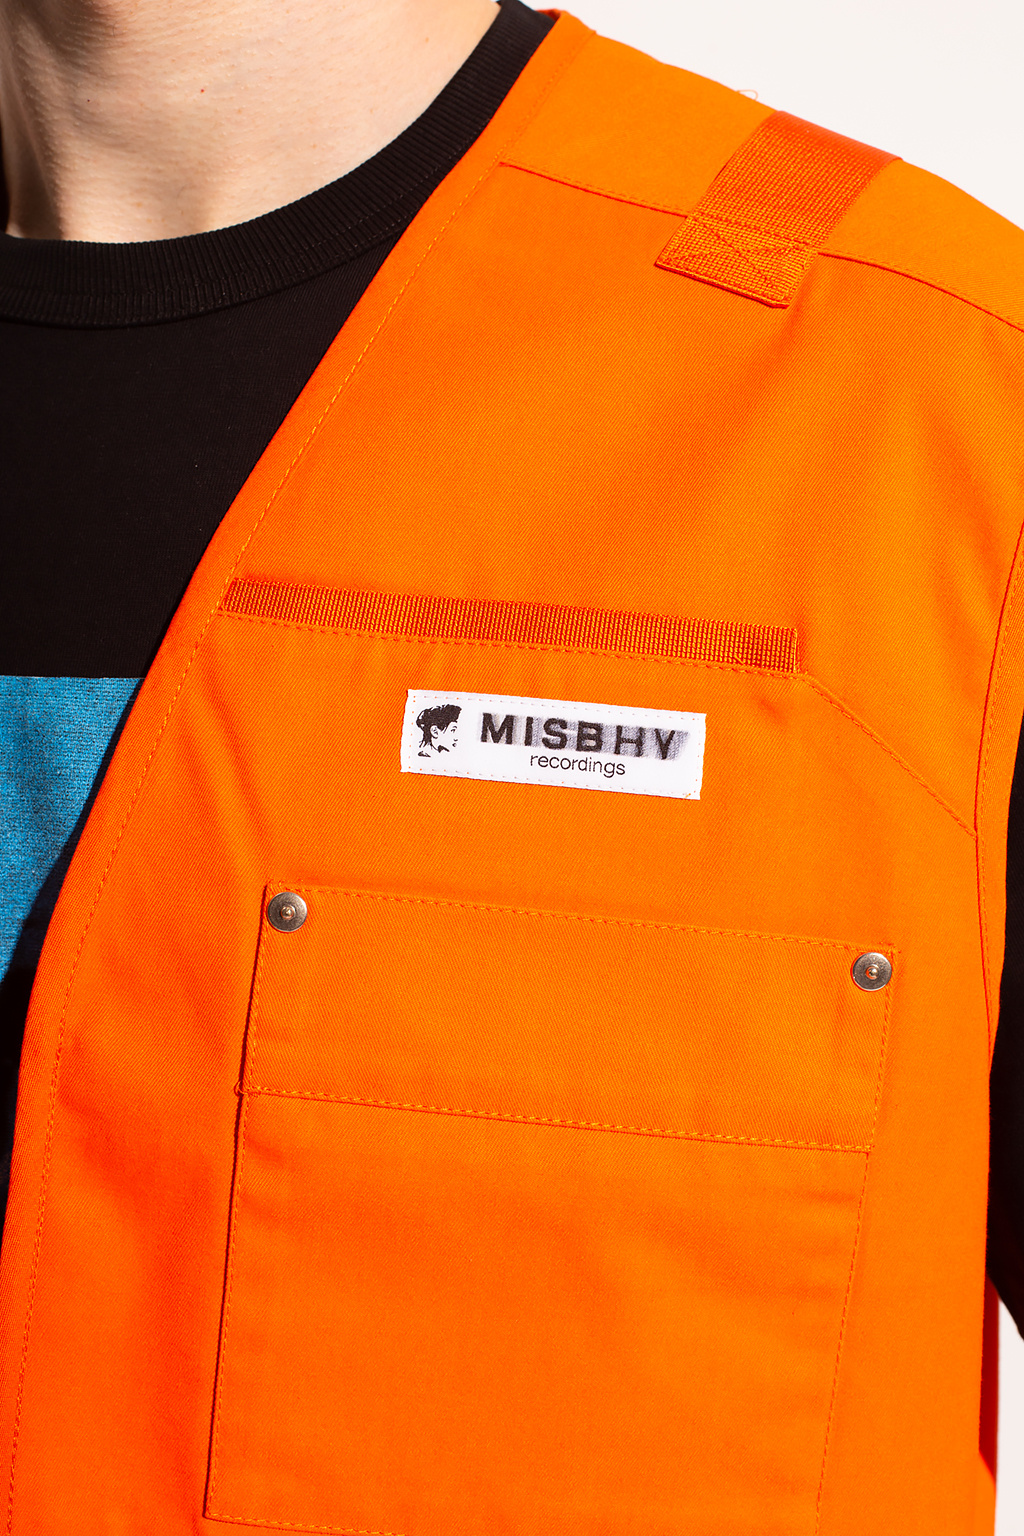 MISBHV ‘Recordings’ vest